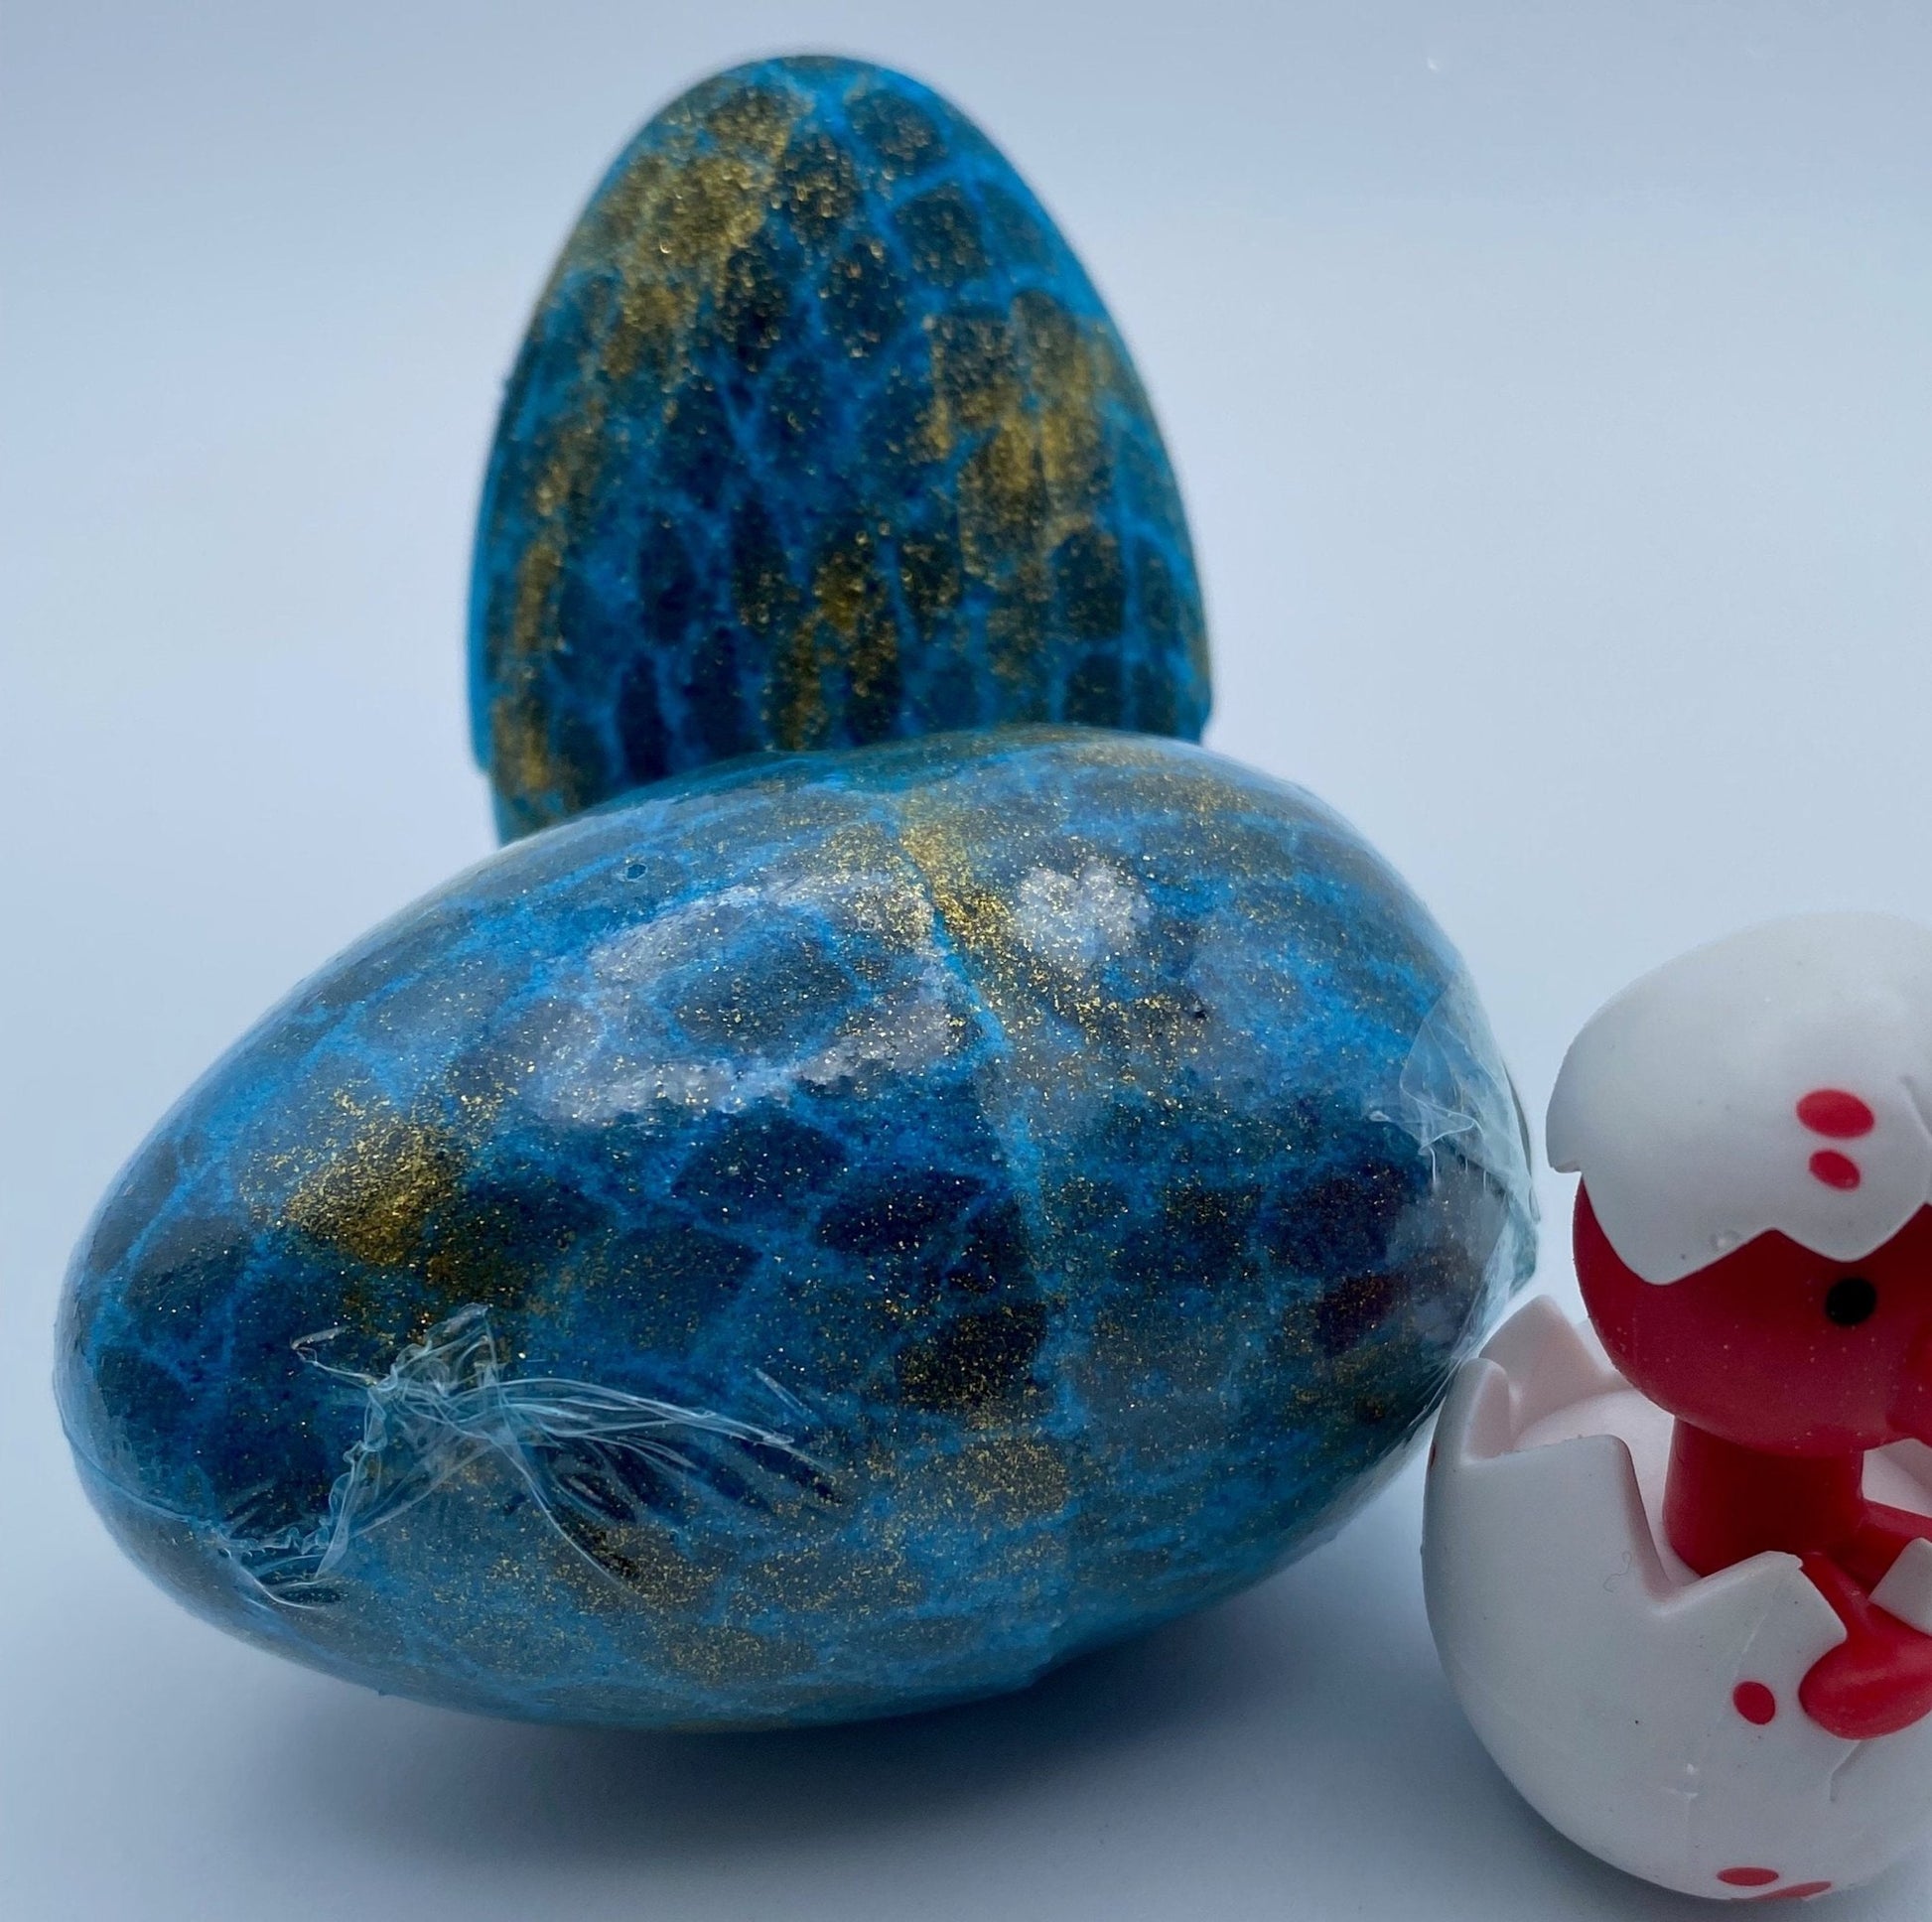 Dino Egg Bath Bomb with Toy Inside - Berwyn Betty's Bath & Body Shop